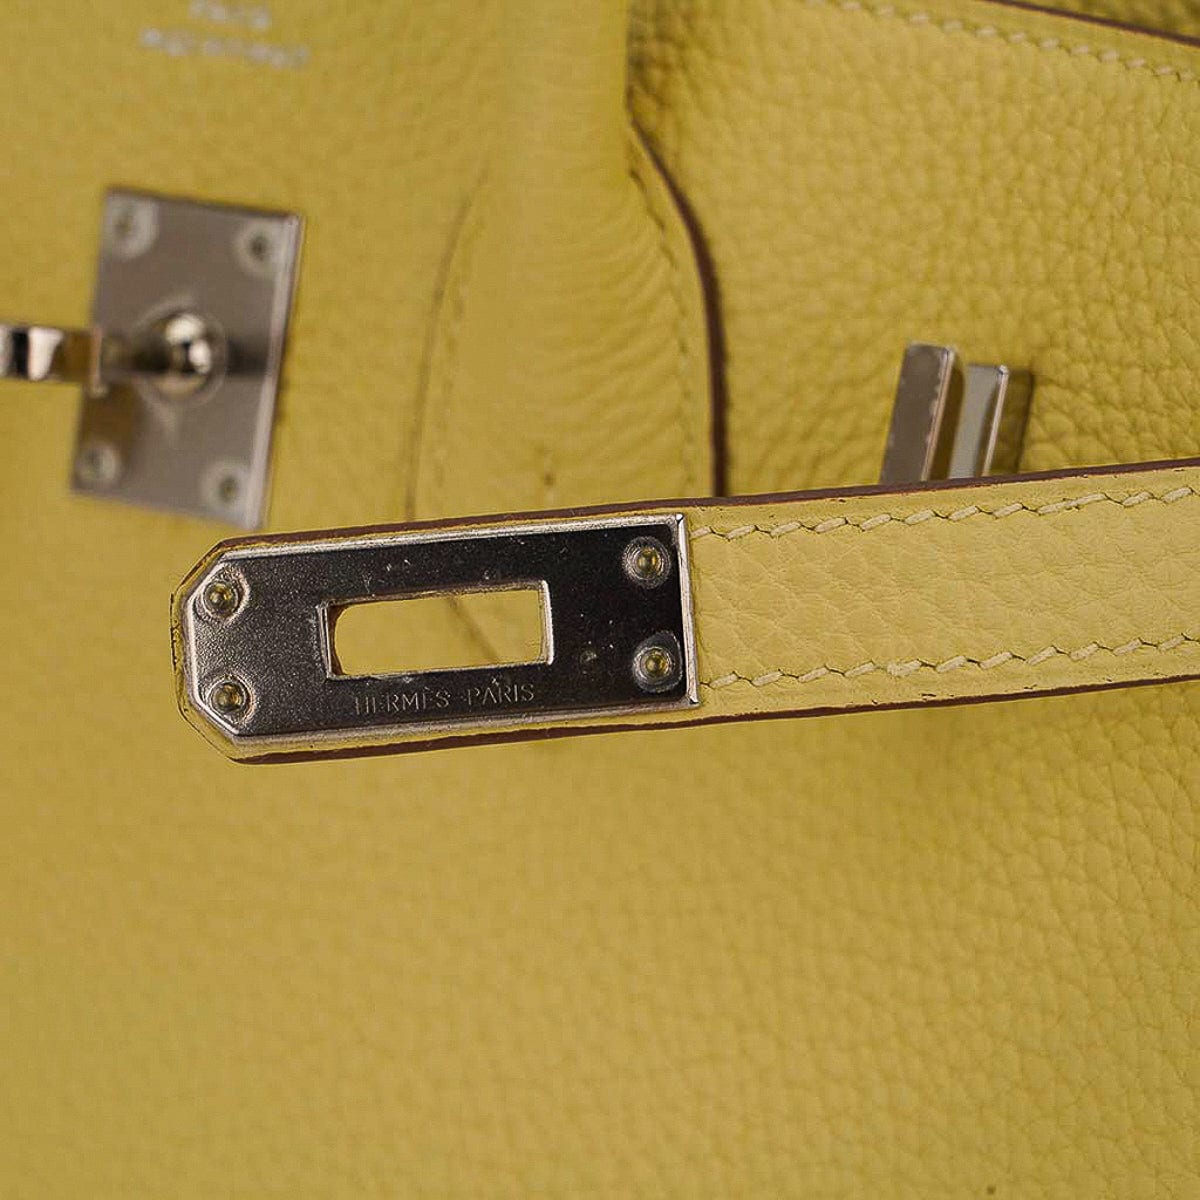 Hermes Birkin Handbag Curry Togo with Palladium Hardware 30 Yellow